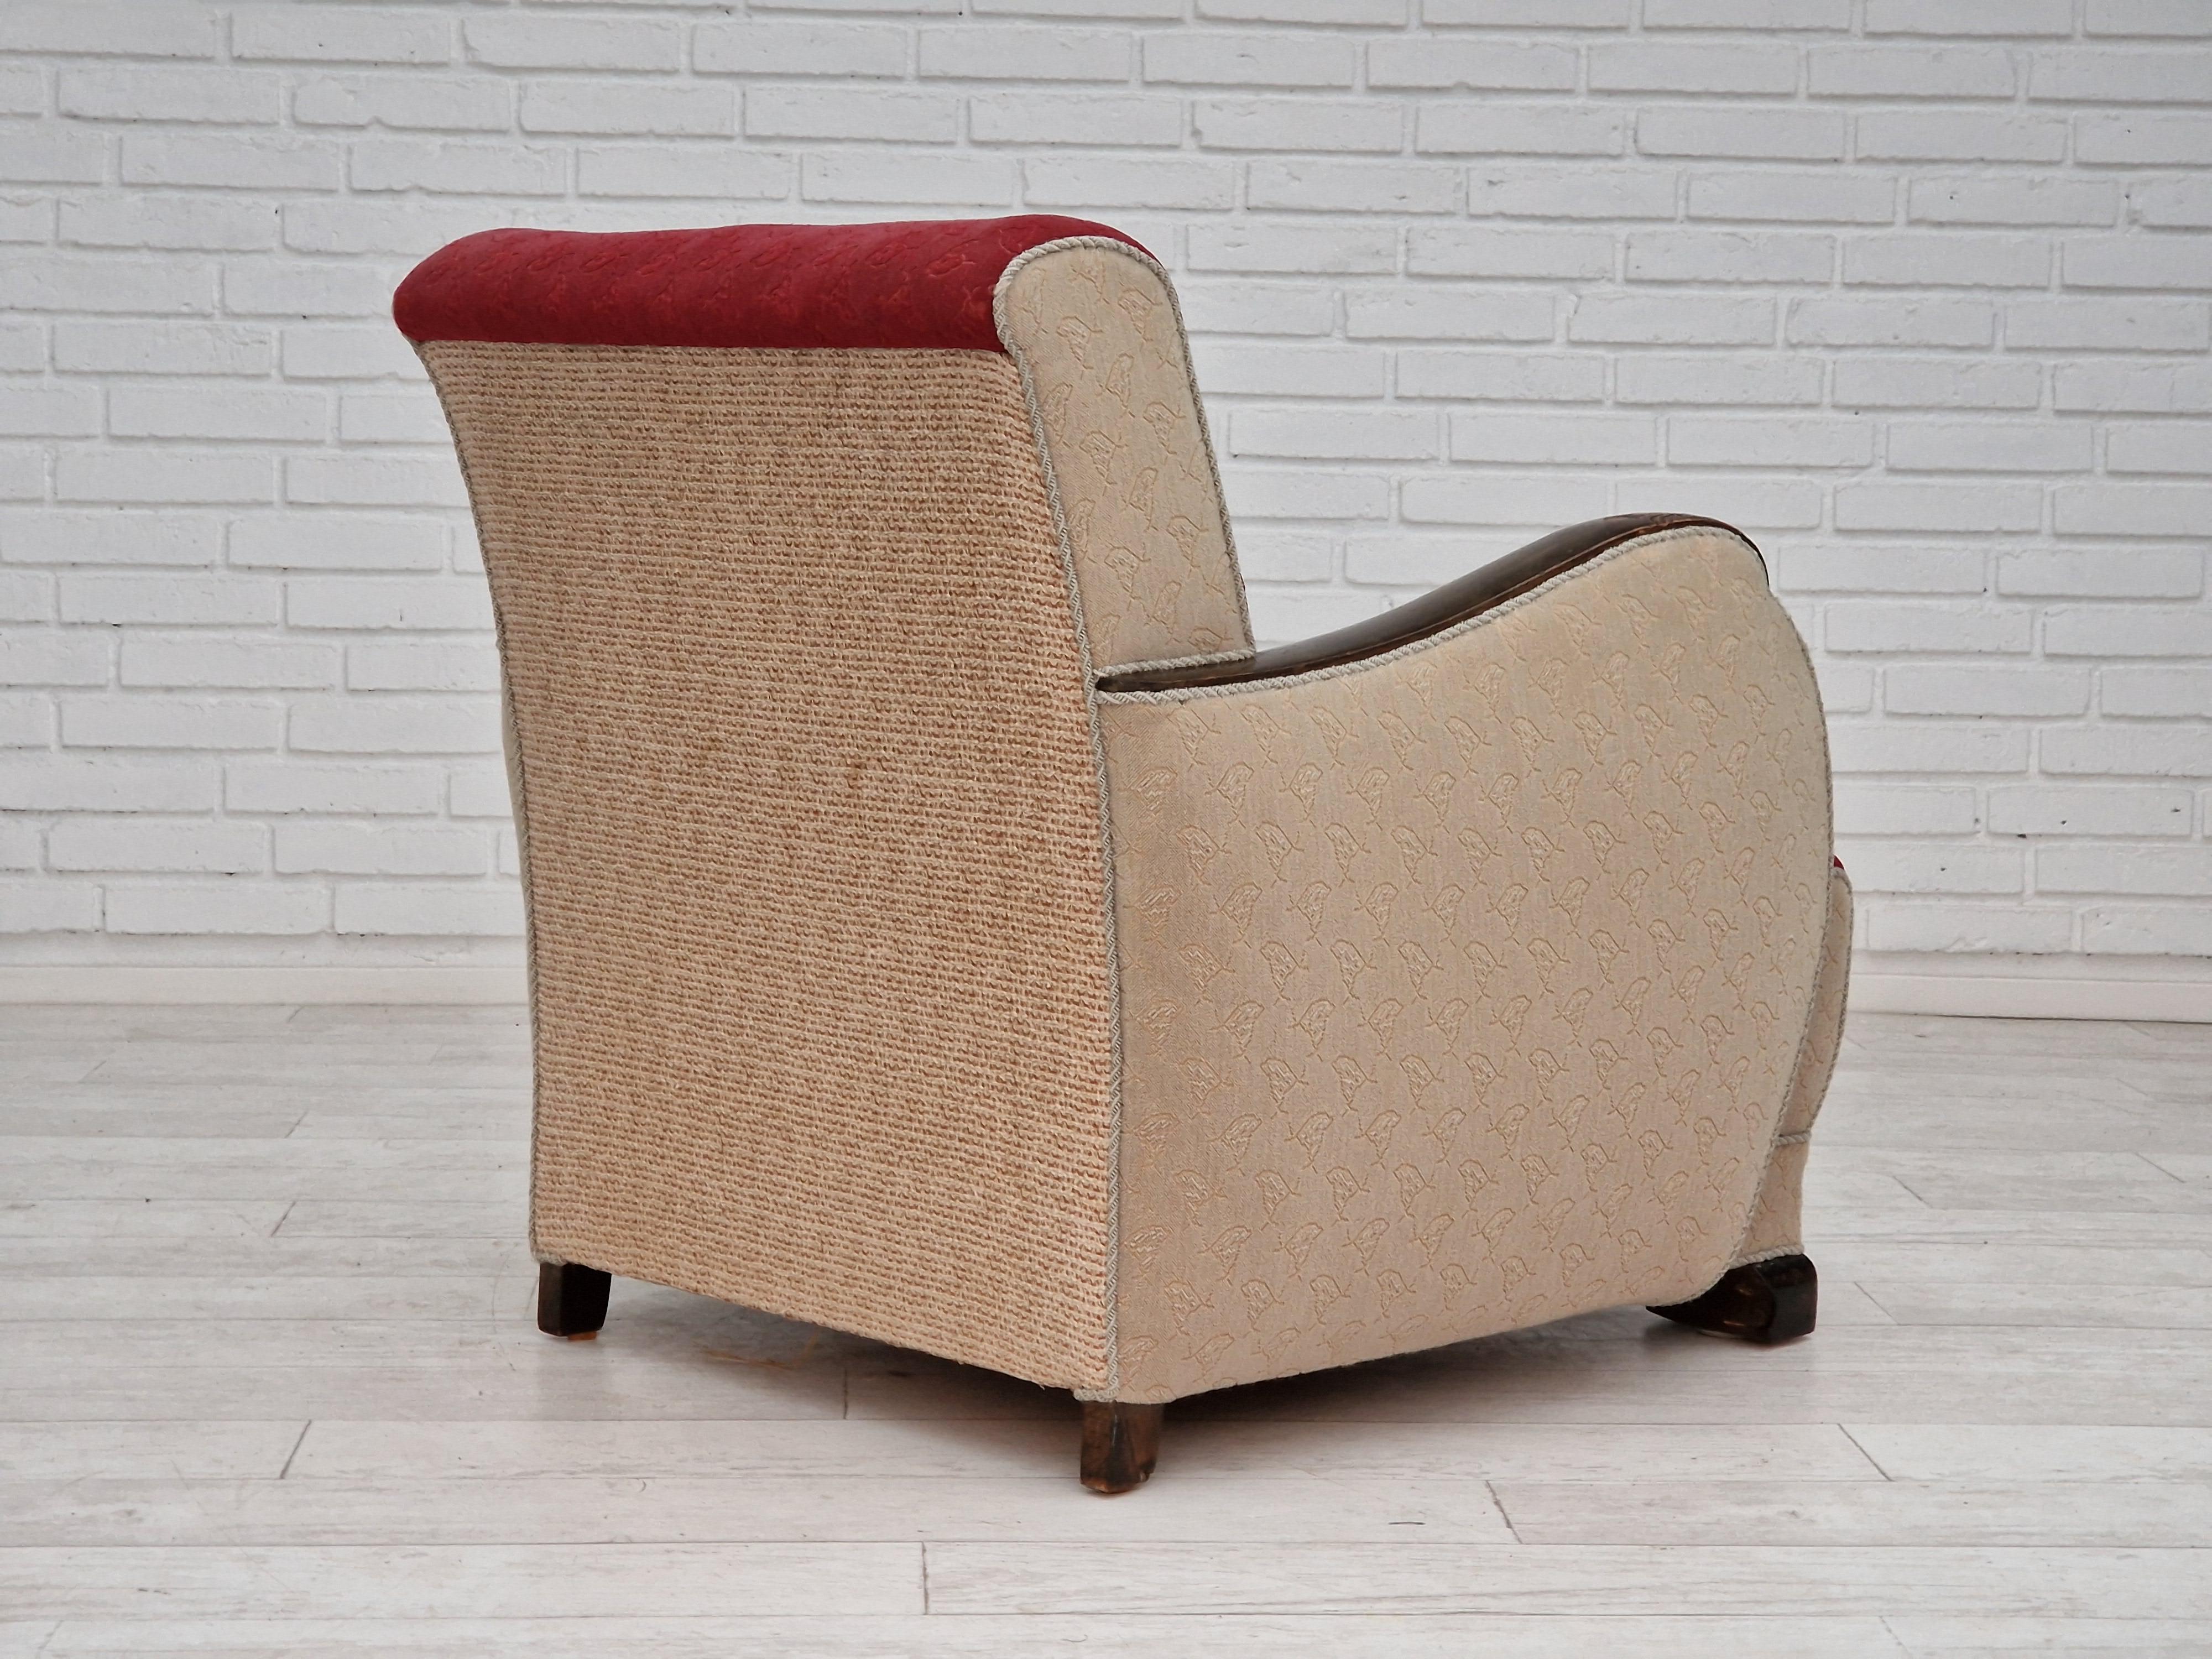 1950s, Scandinavian Art Deco Chairs, Original Condition For Sale 2